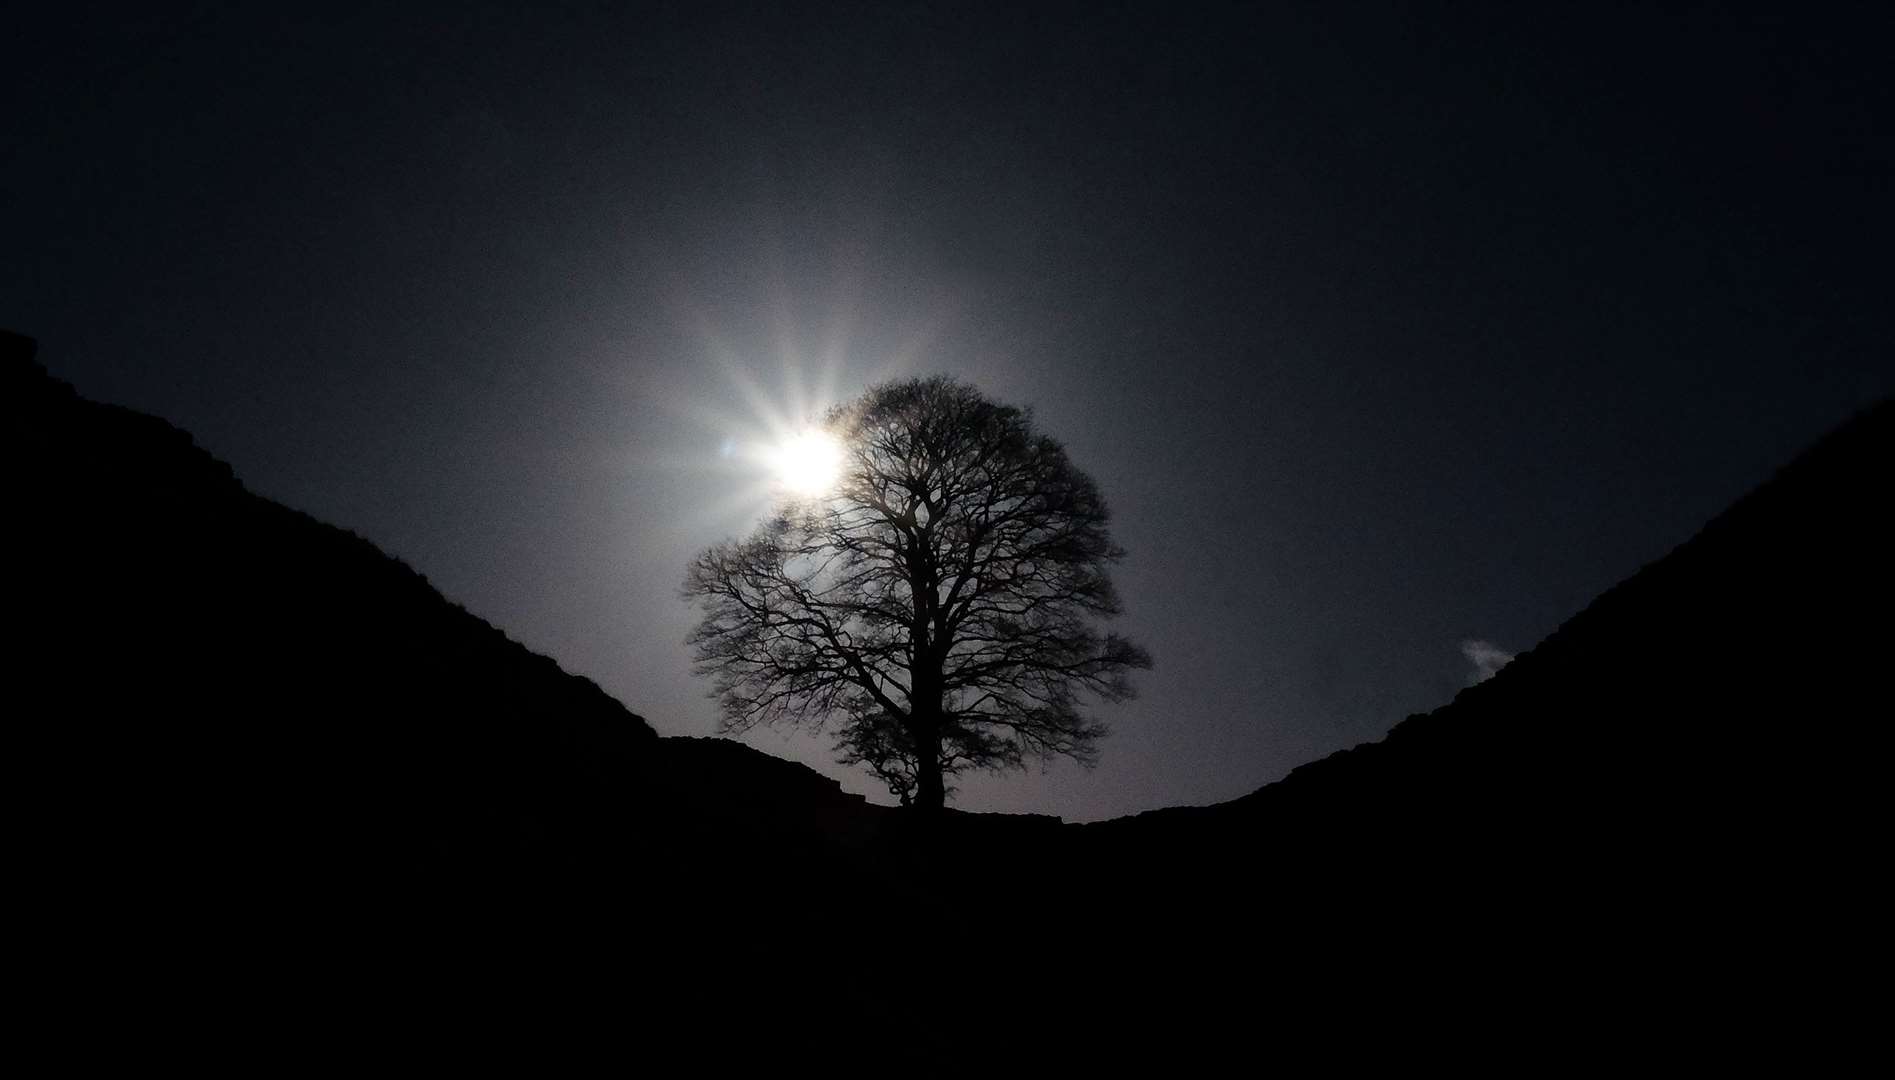 Light shines through the tree (Owen Humphreys/PA)